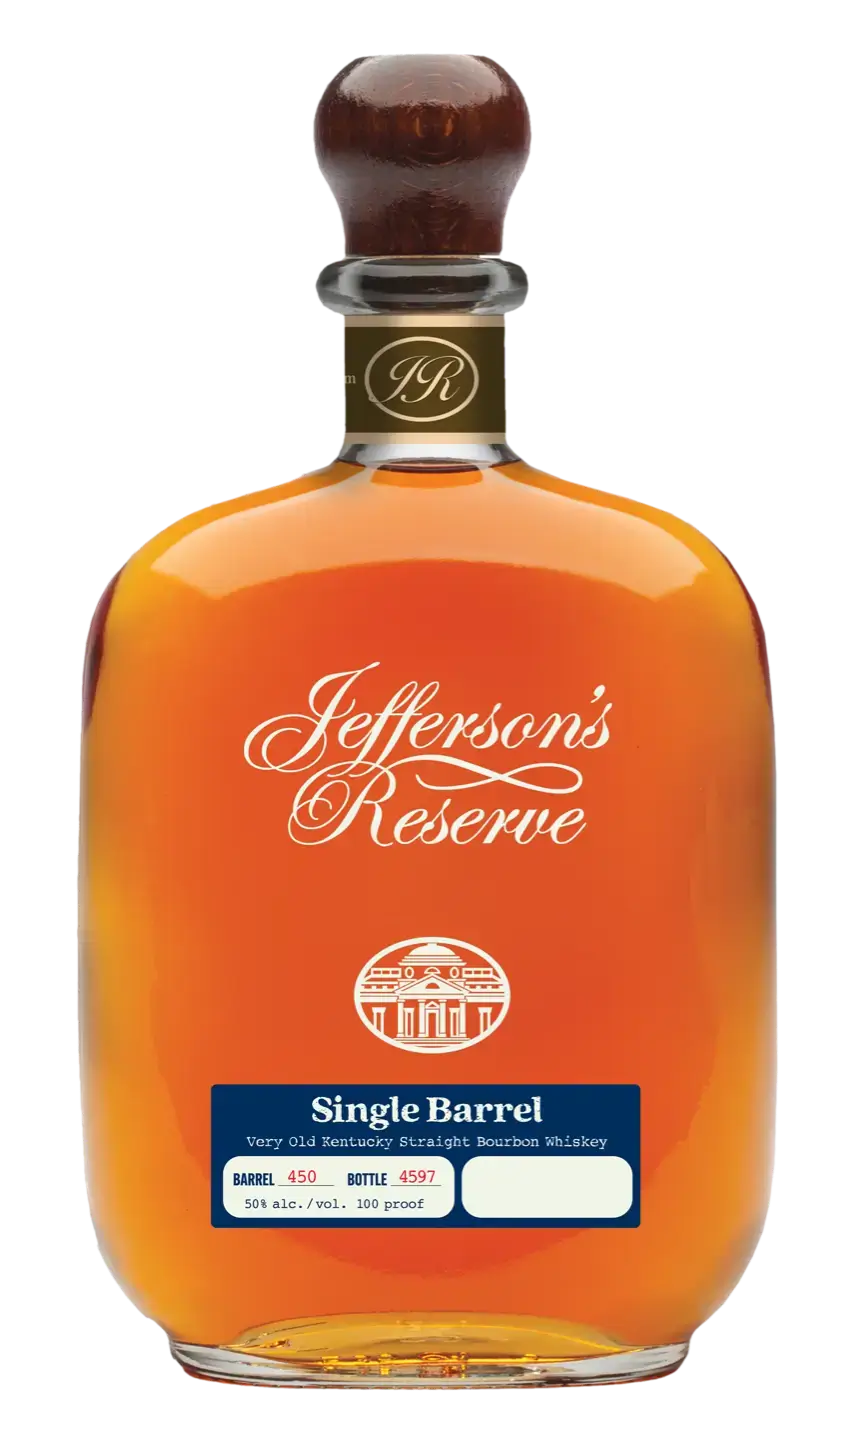 Jefferson's Reserve Single Barrel Bourbon